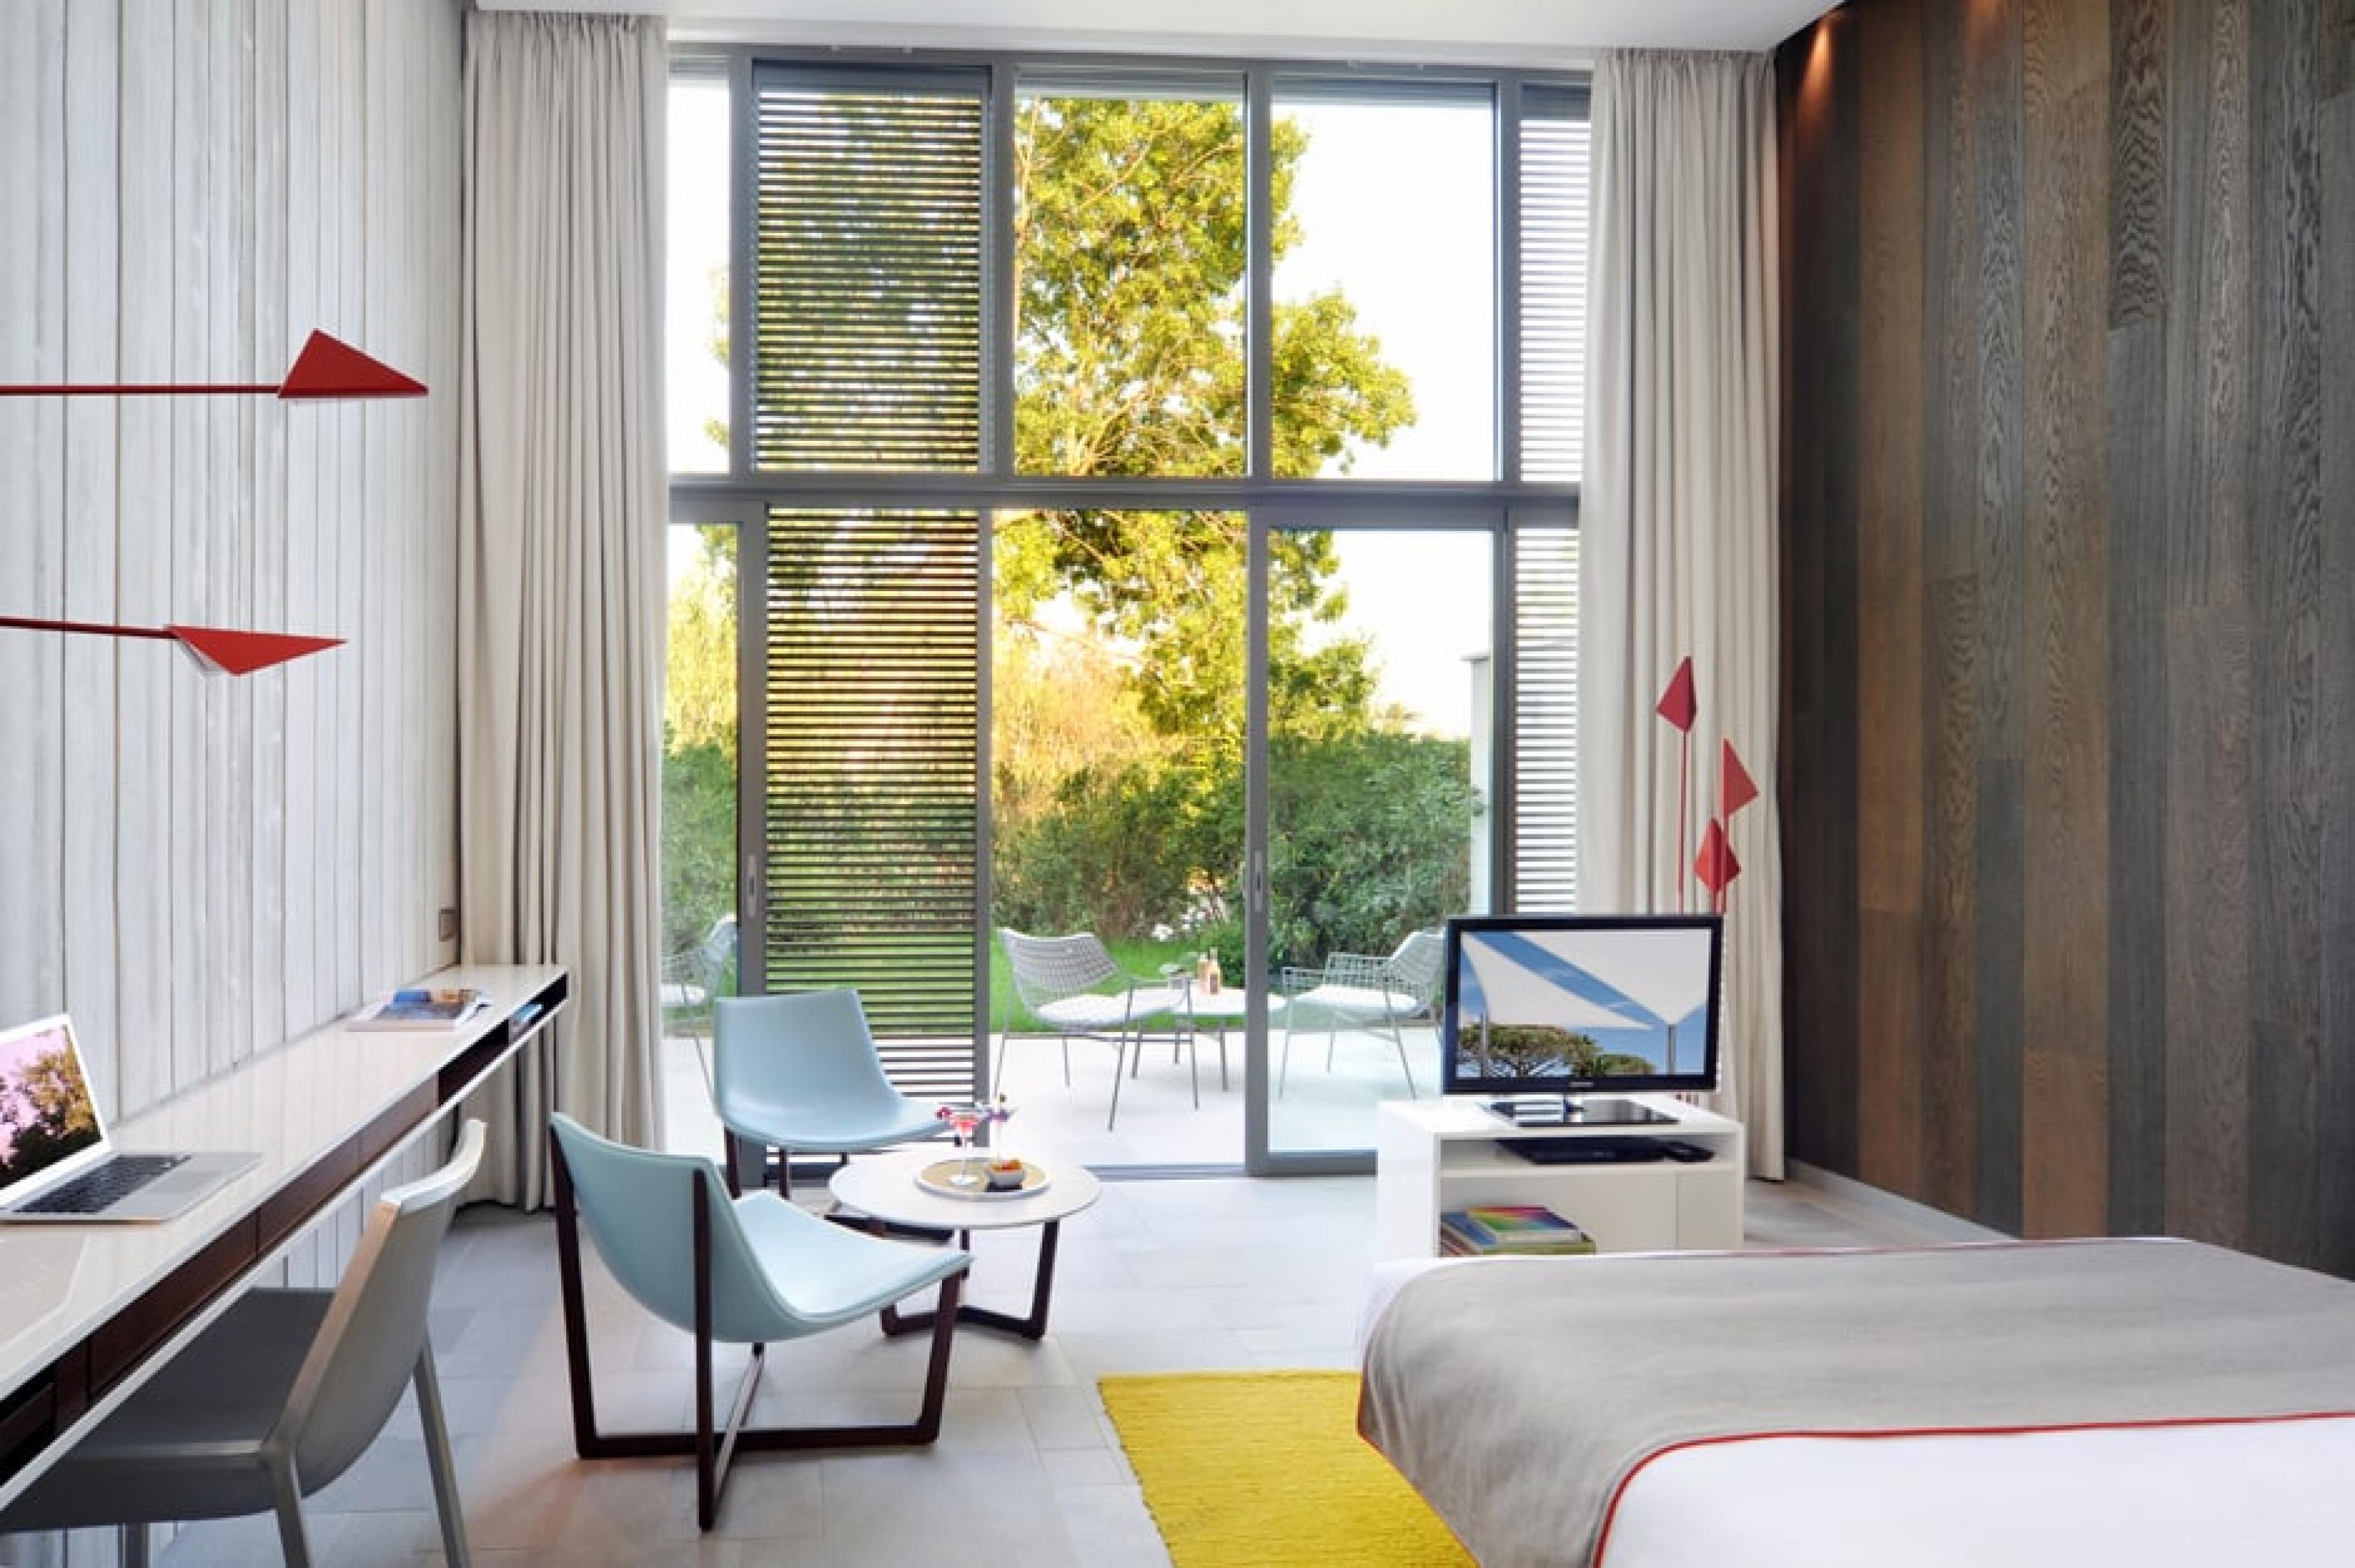 Suite at Hotel Sezz, St. Tropez, France - Courtesy of Manuel Zublena